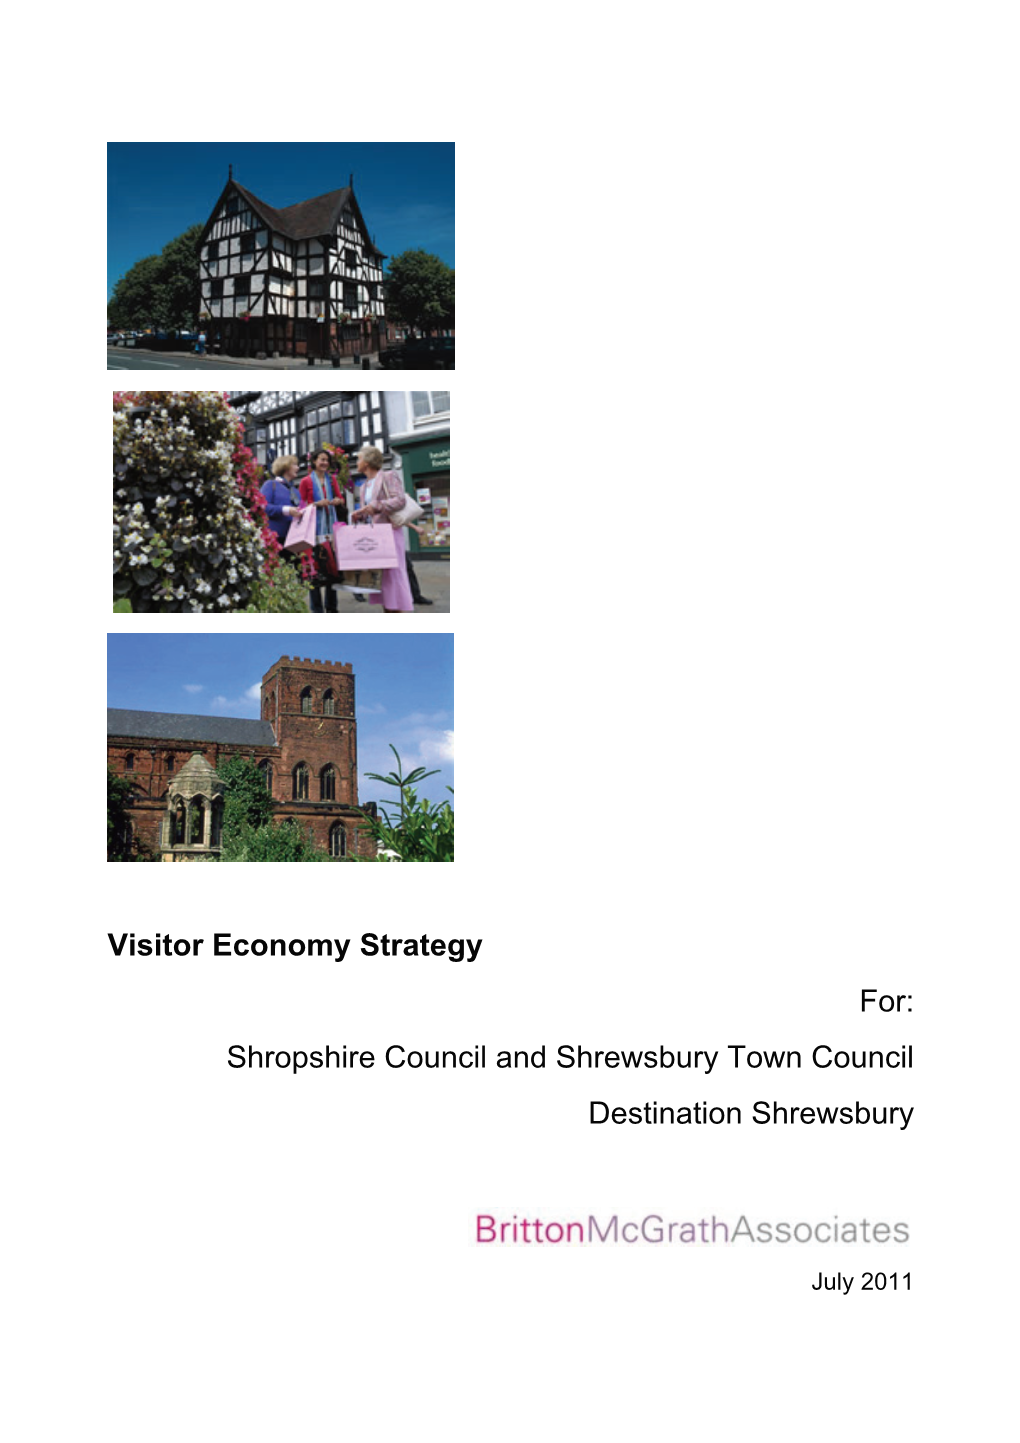 Visitor Economy Strategy For: Shropshire Council and Shrewsbury Town Council Destination Shrewsbury